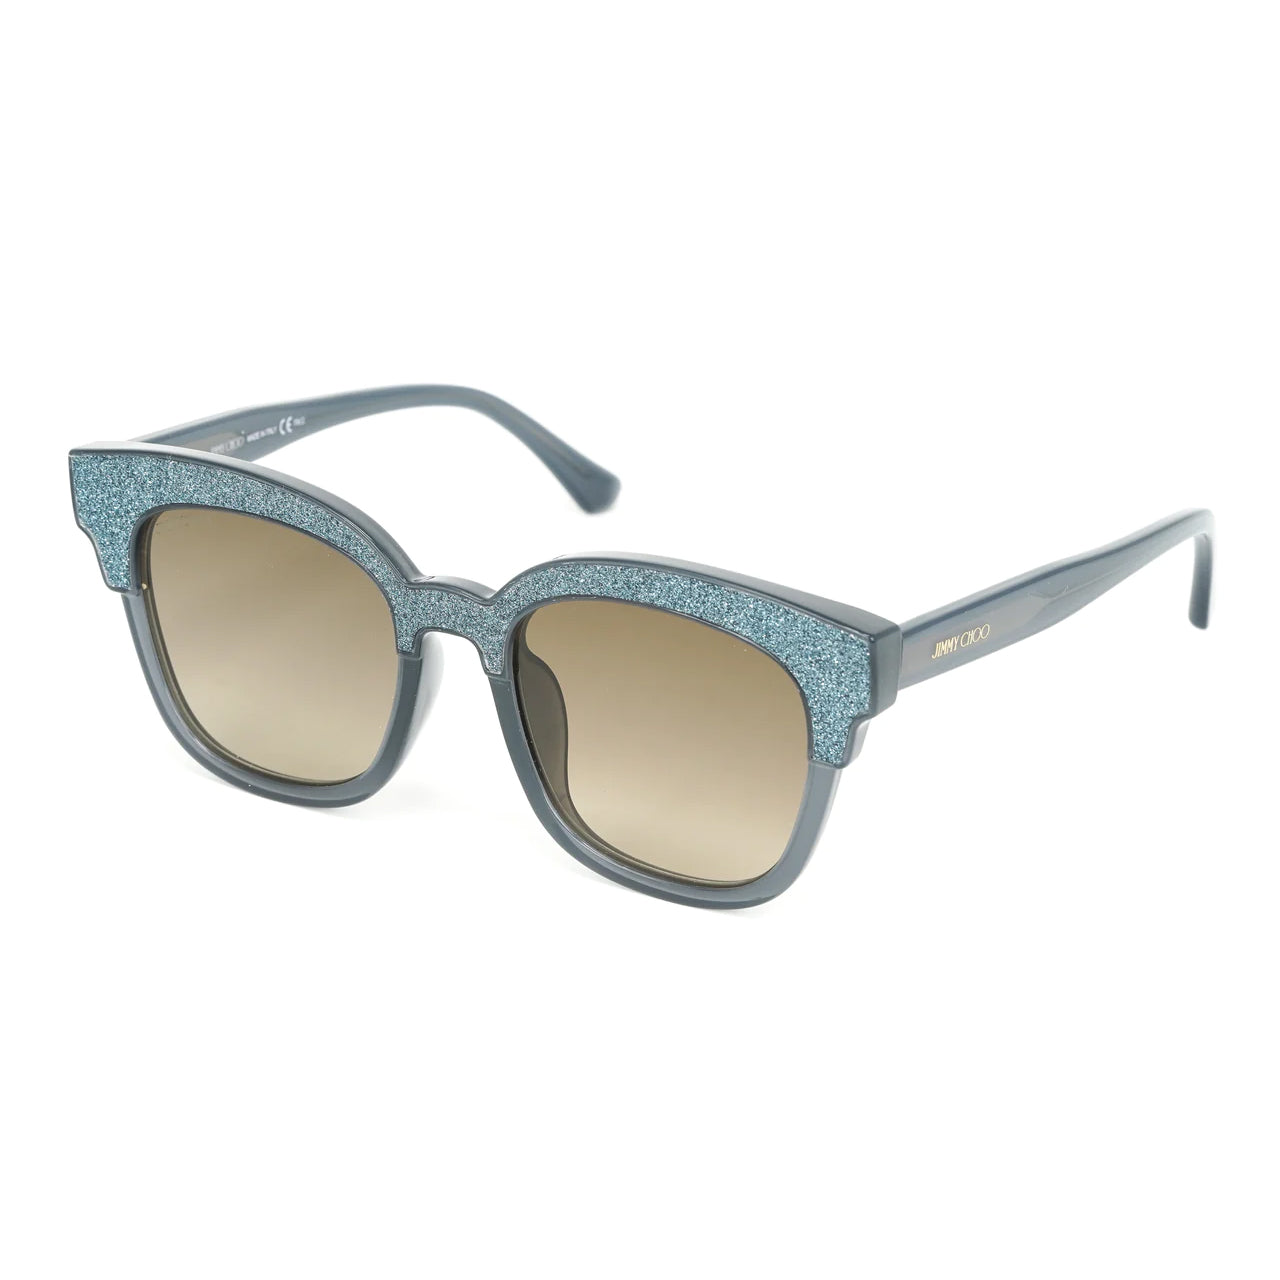 Jimmy Choo Women's Sunglasses Classic Square Grey Glitter MAYELA/S 18V